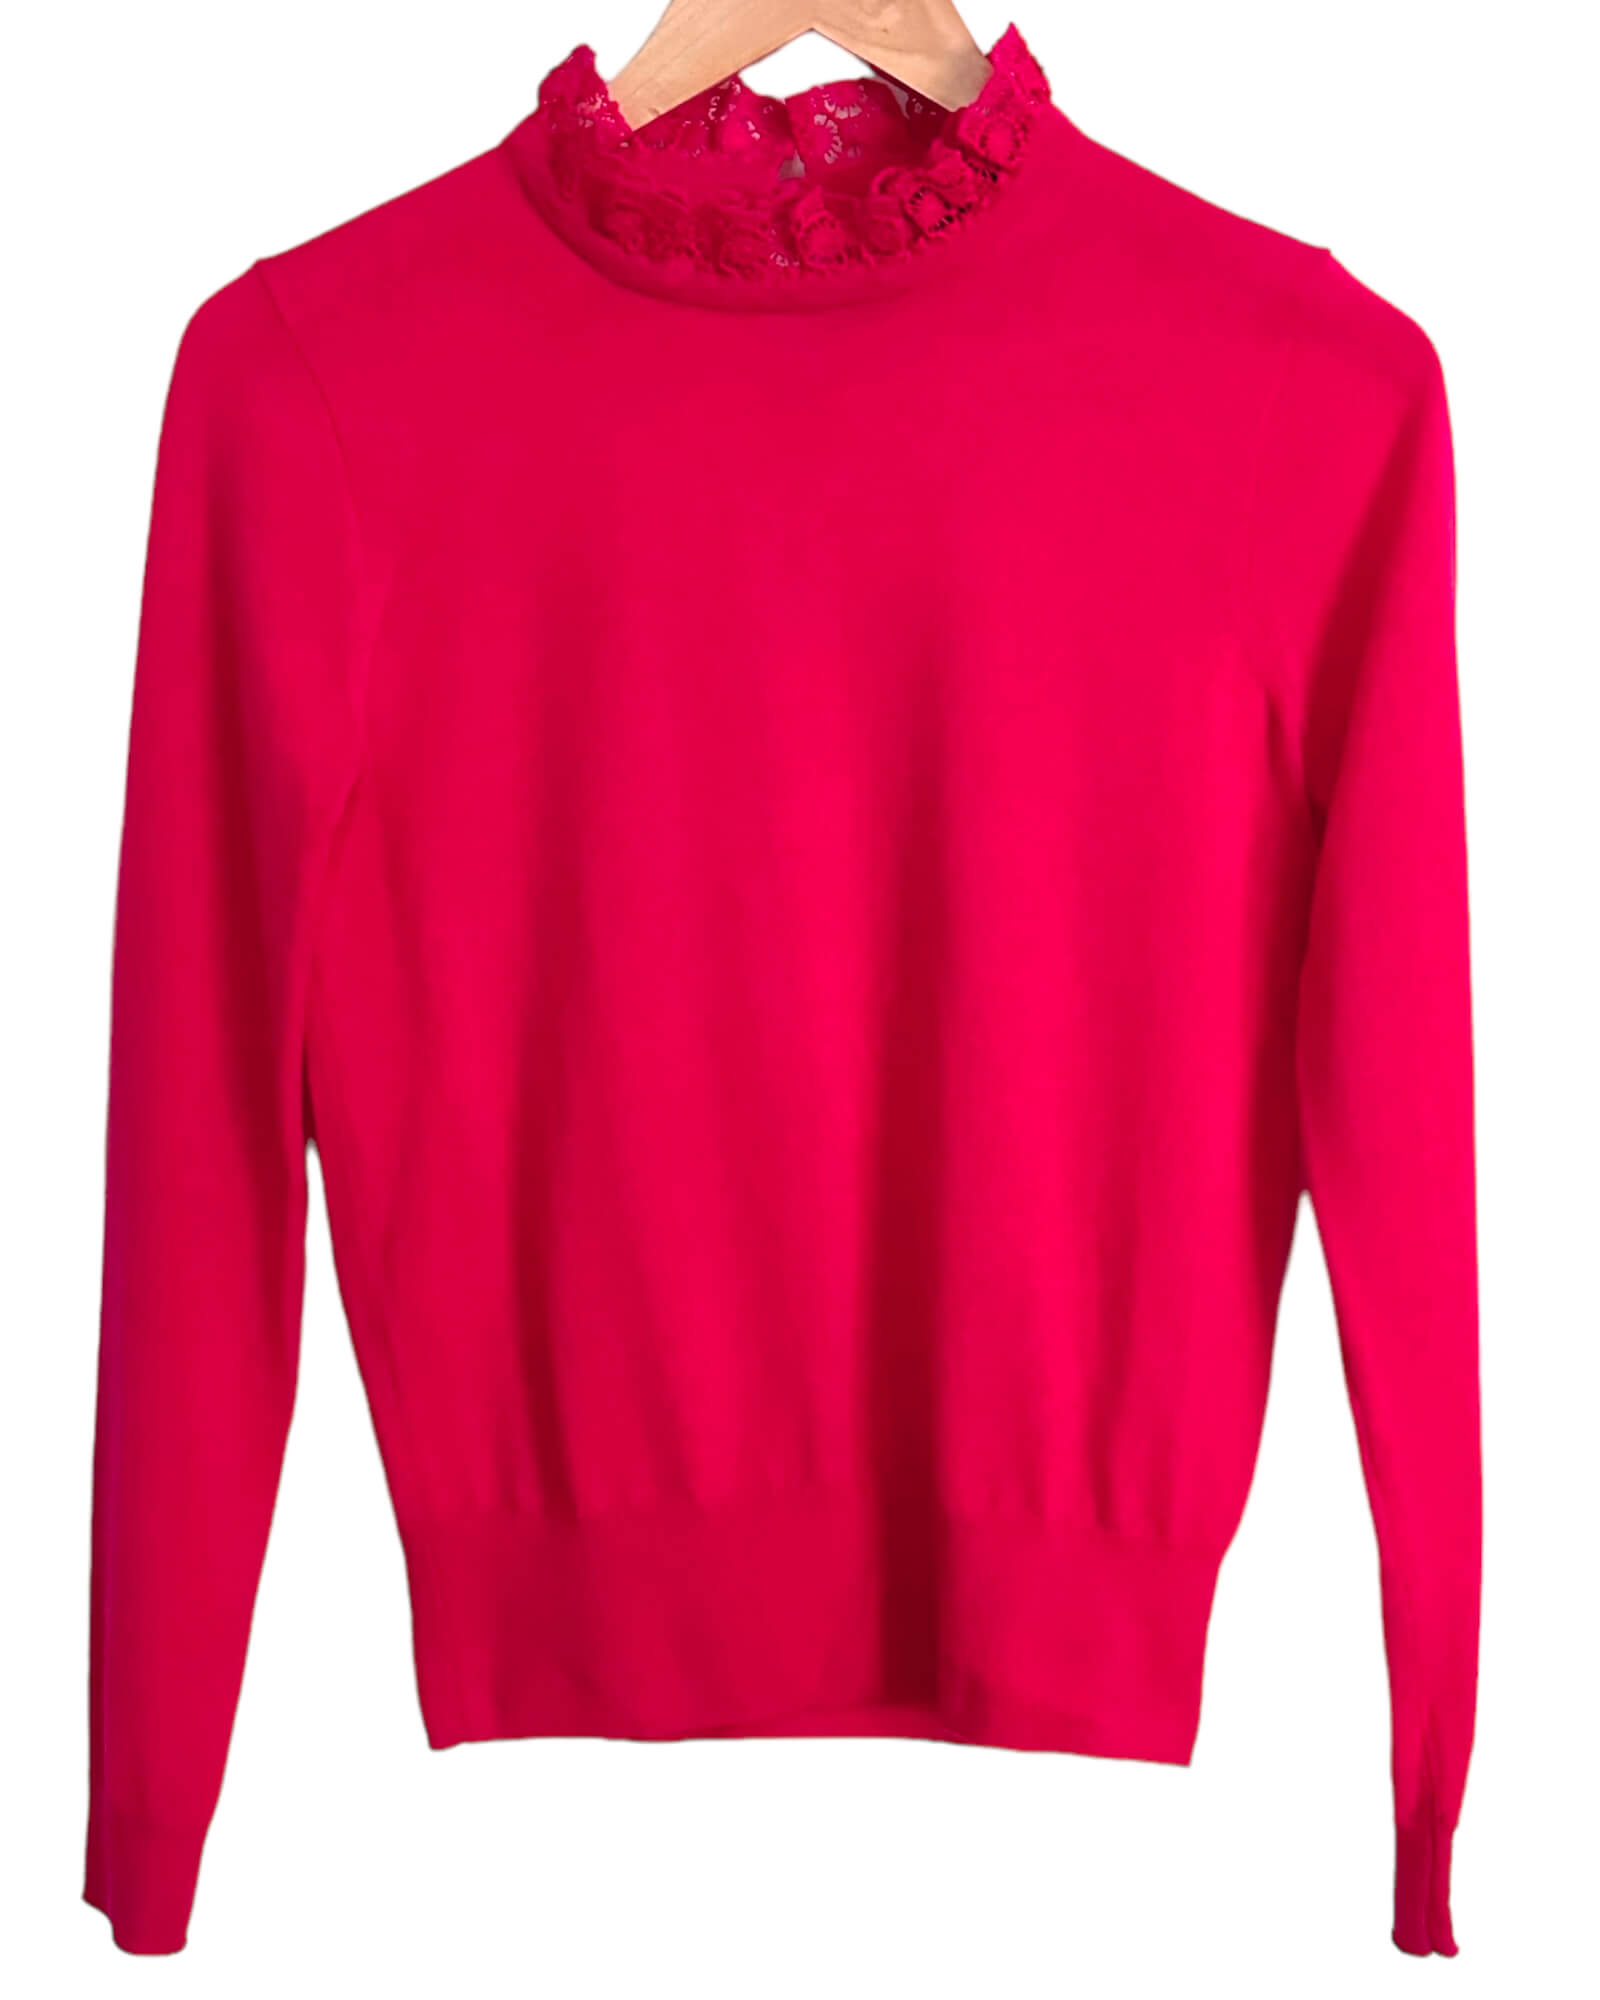 Light Spring J.CREW poppy pink lace trim wool sweater